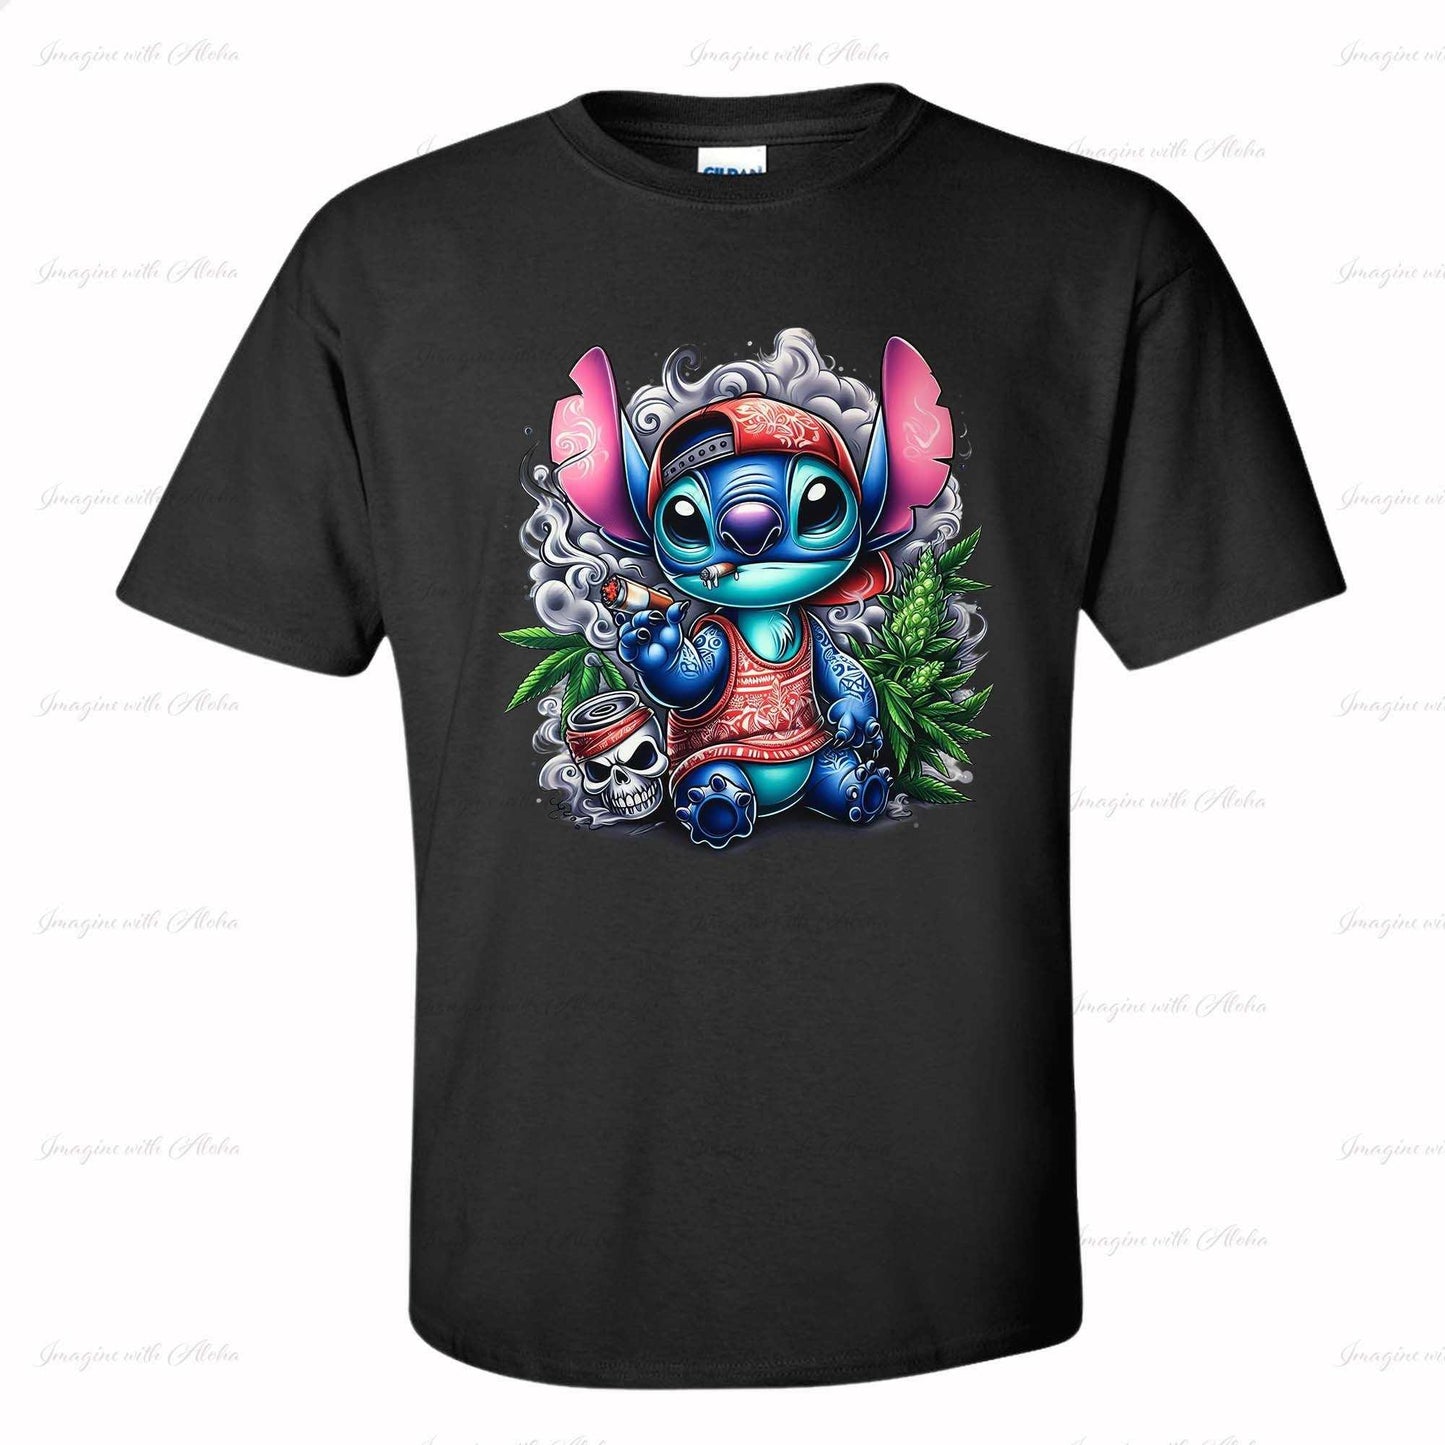 420 Carton T-Shirt, Cannabis Carton T-Shirt - Imagine With Aloha